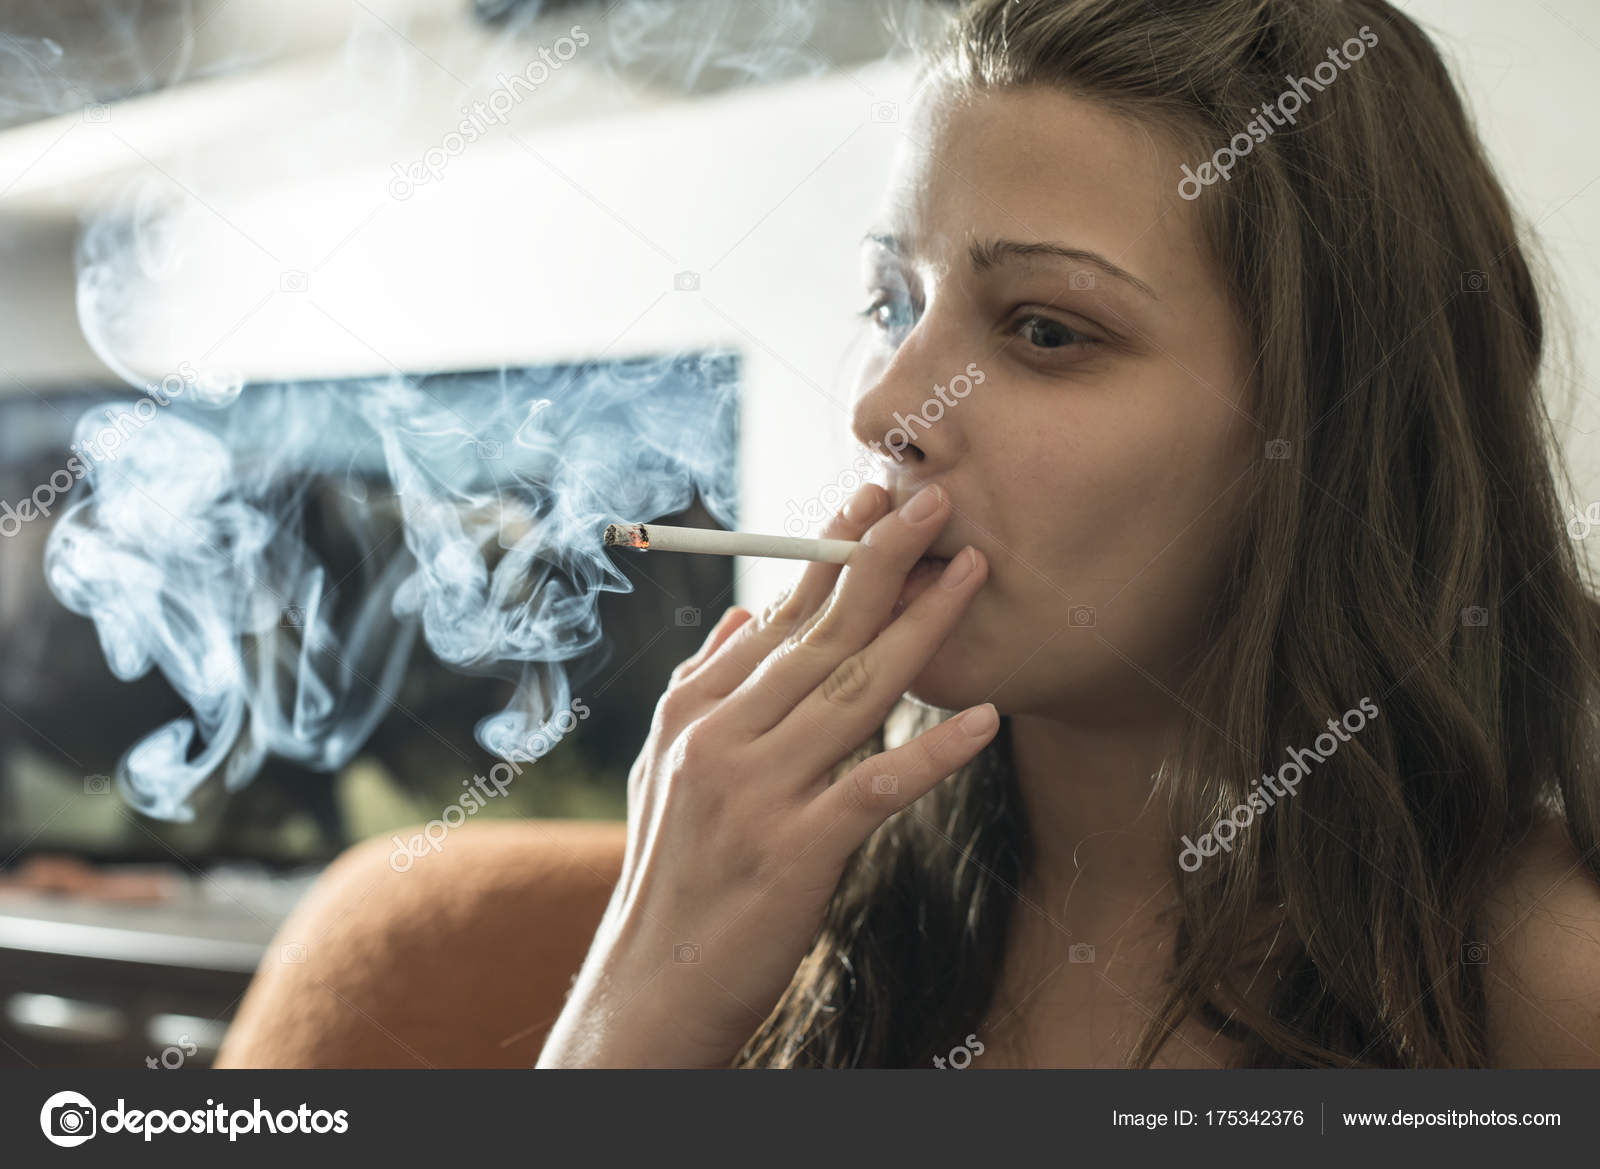 brian rasco add photo naked women smoking cigarettes